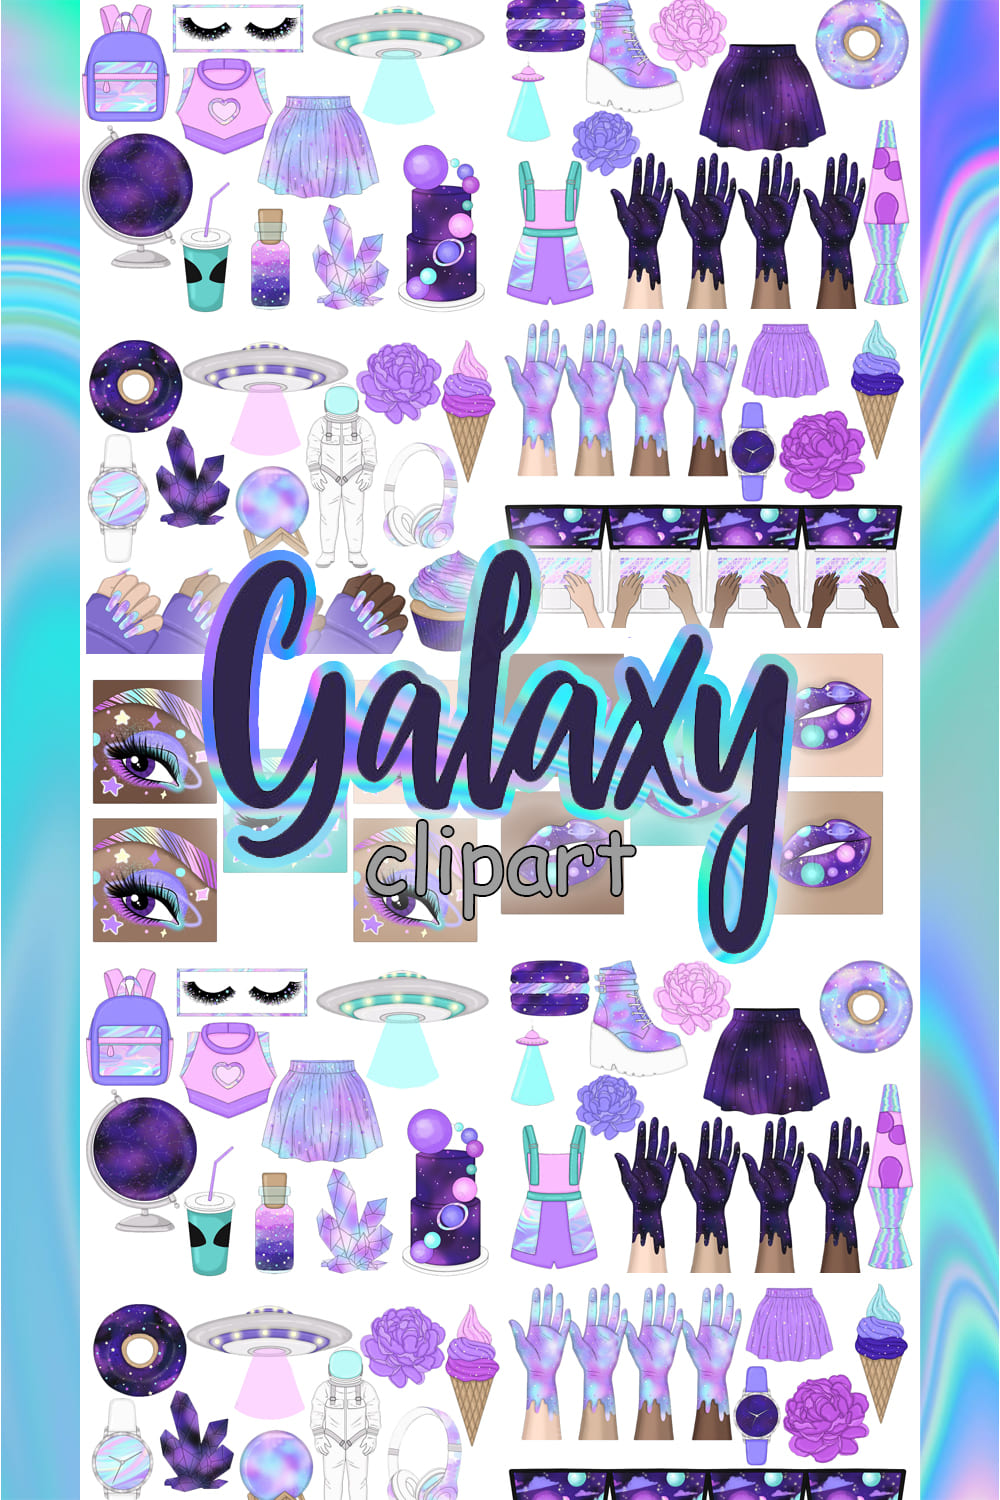 Galaxy Clipart pinterest image.